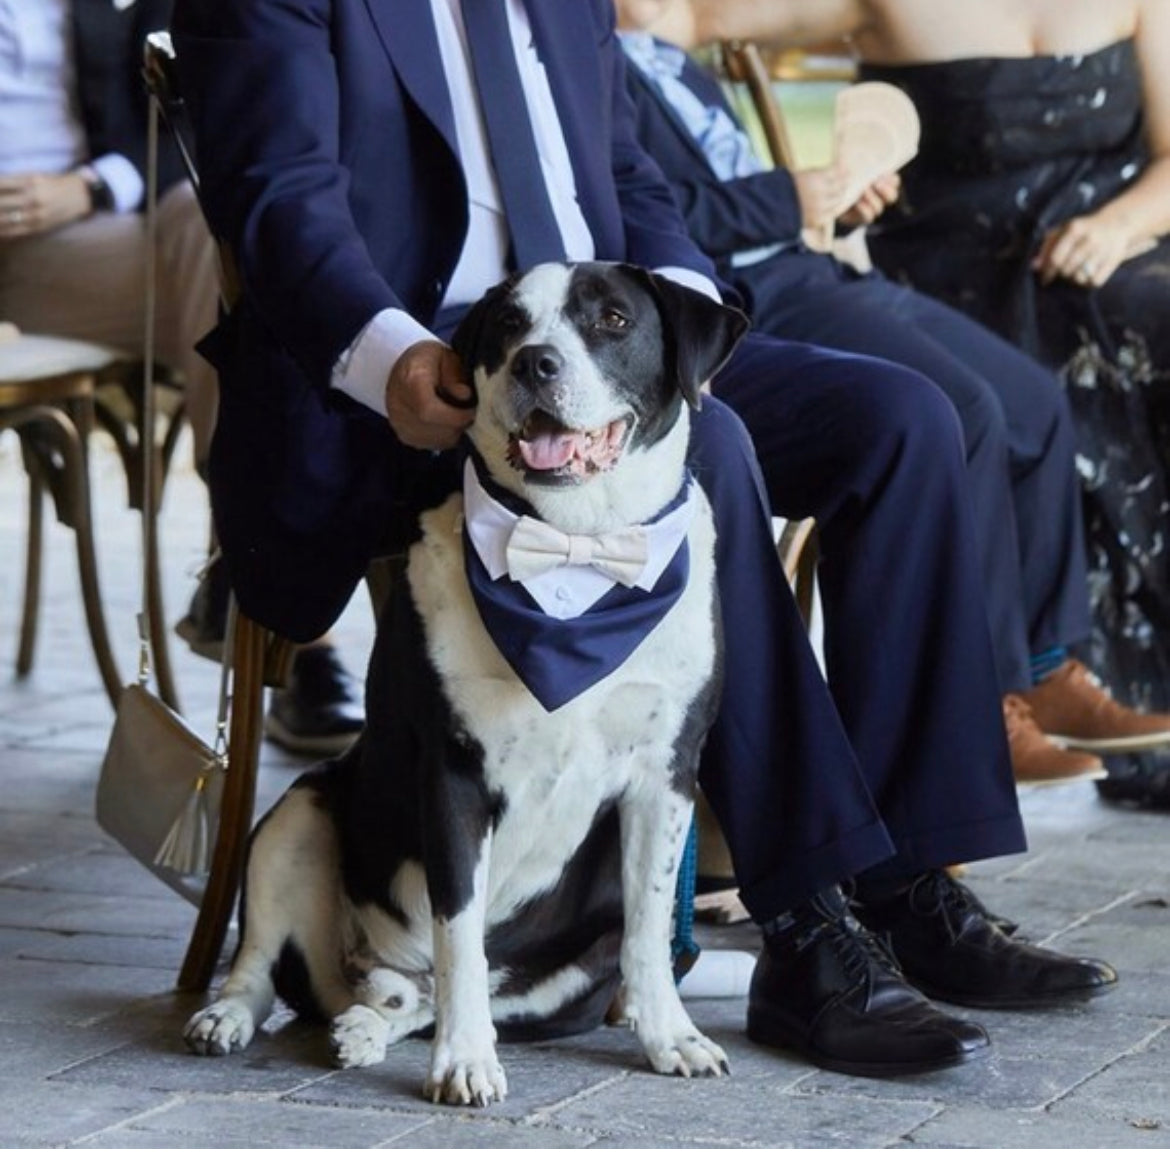 Cute dog looking stylish in his dog tuxedo